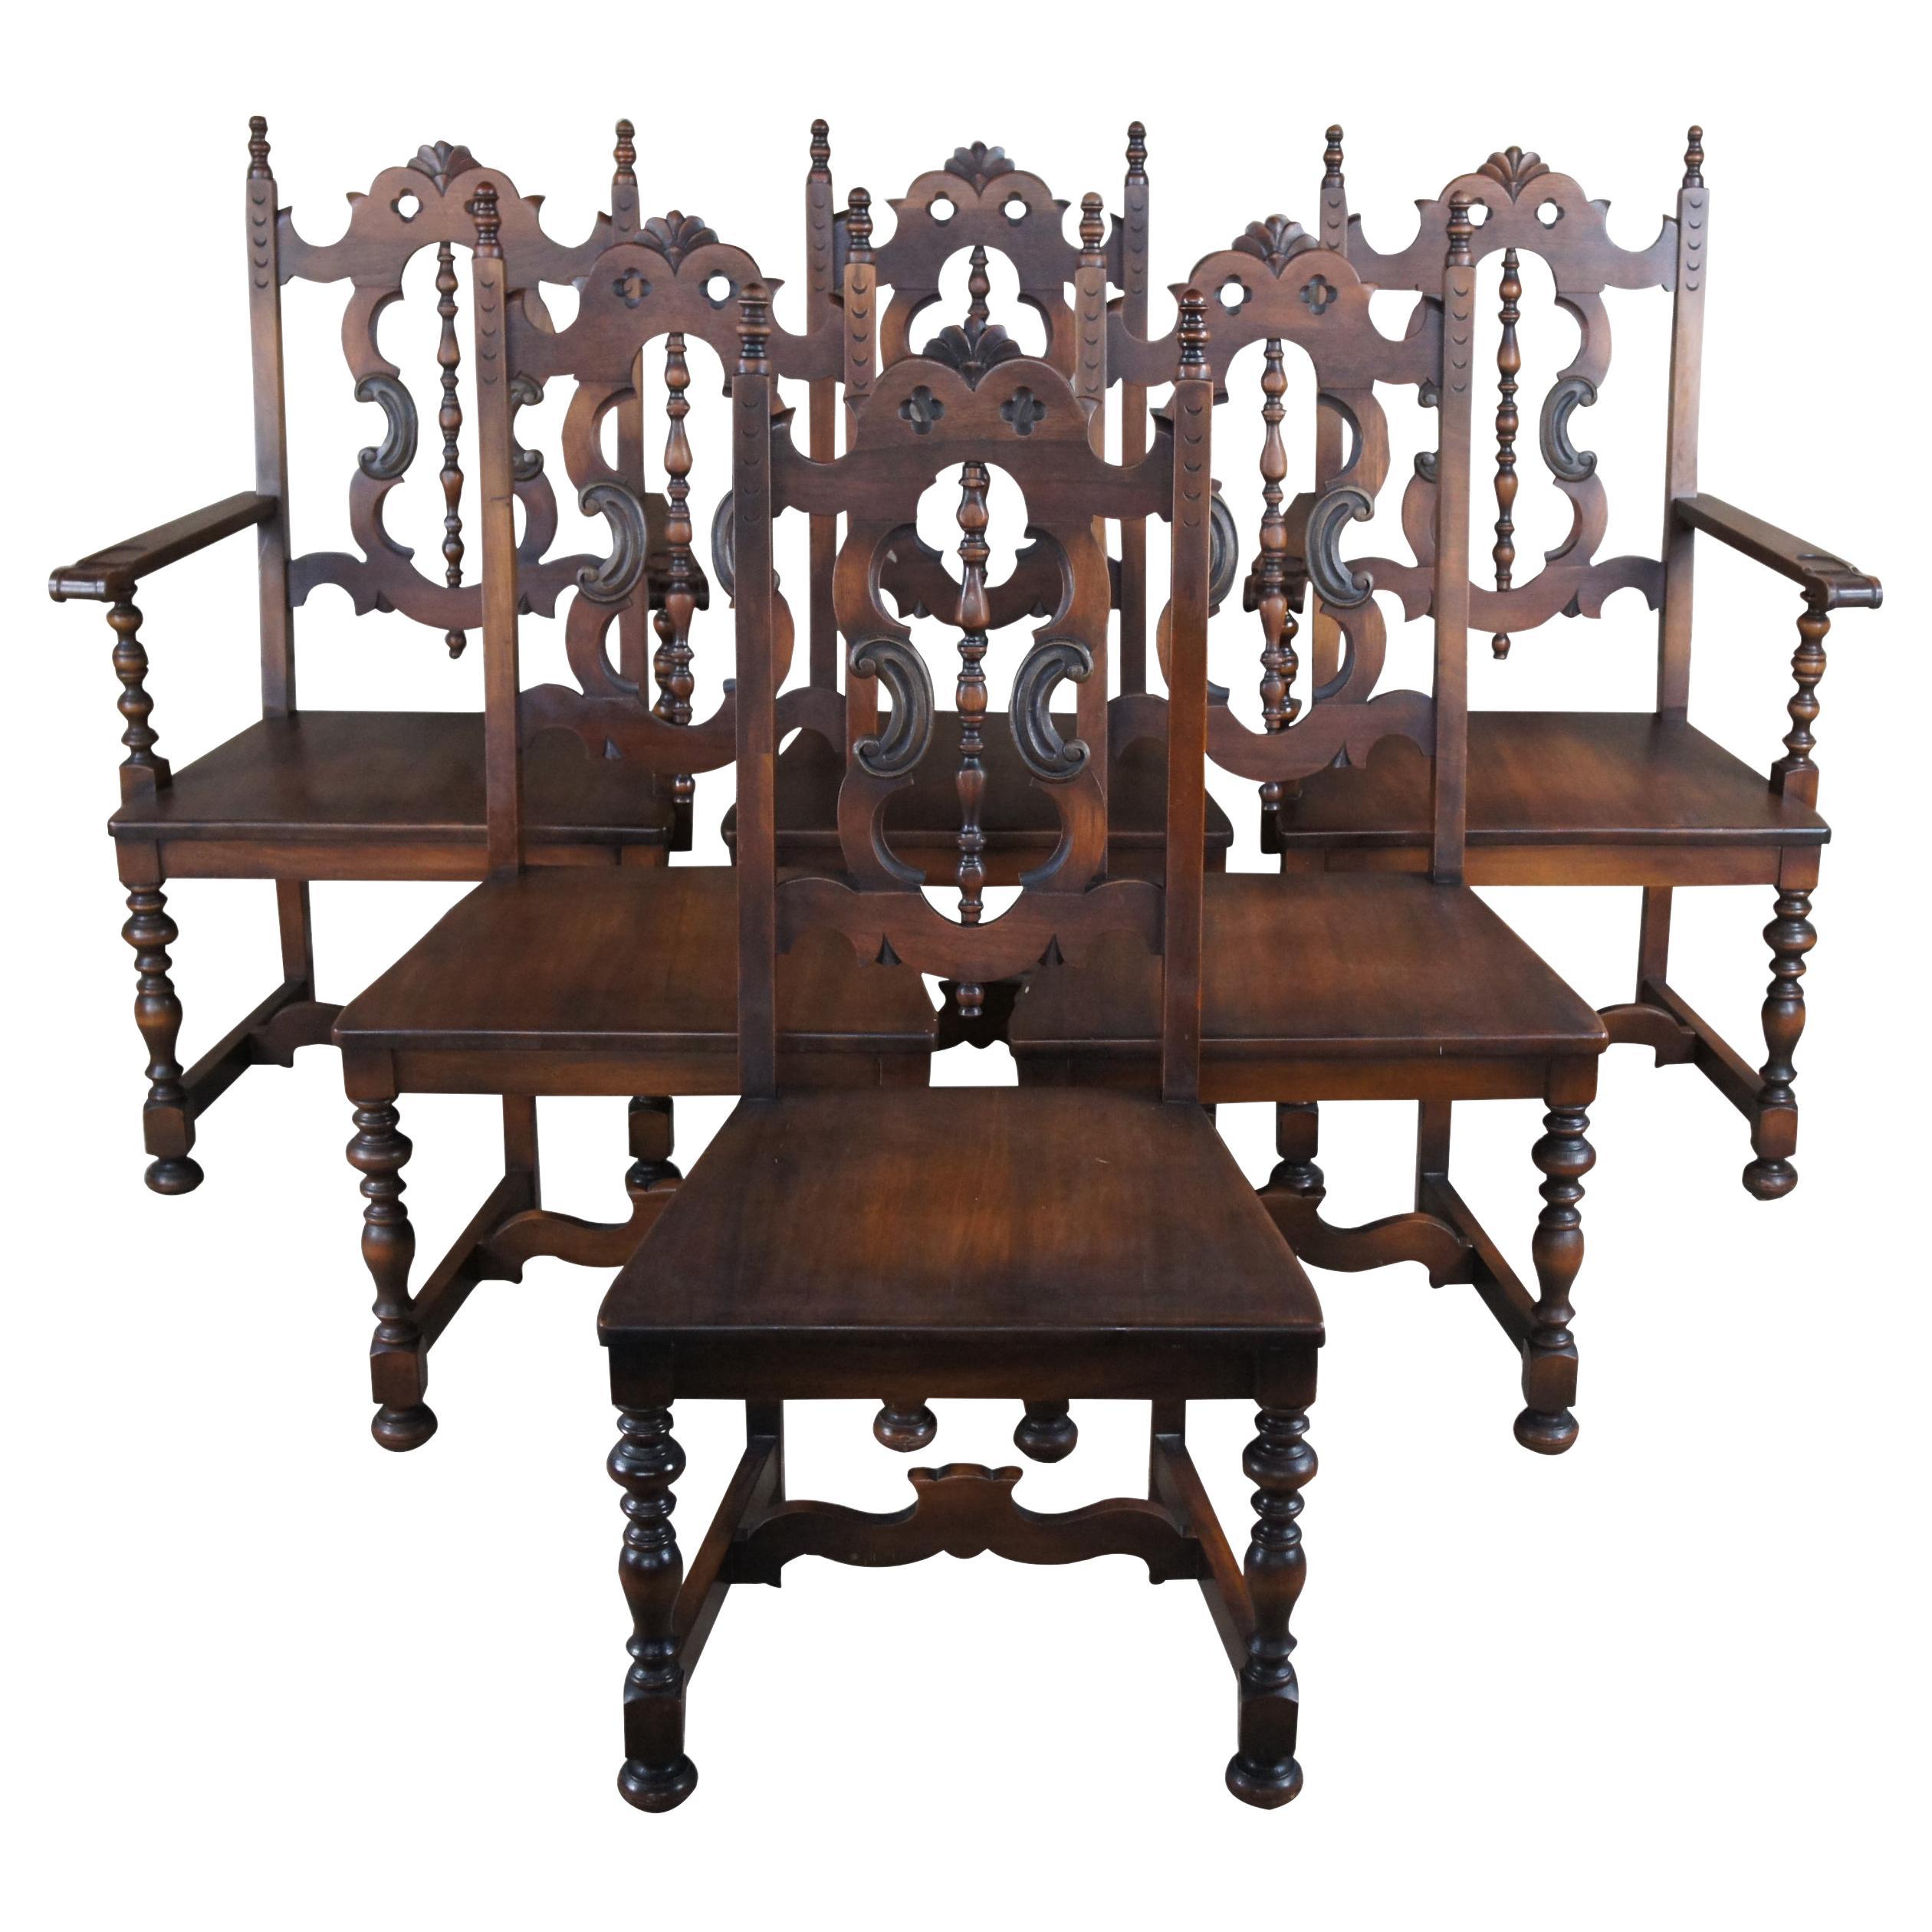 6 Antique Lifetime Furniture Jacobean Gothic Spanish Walnut Dining Chairs Set